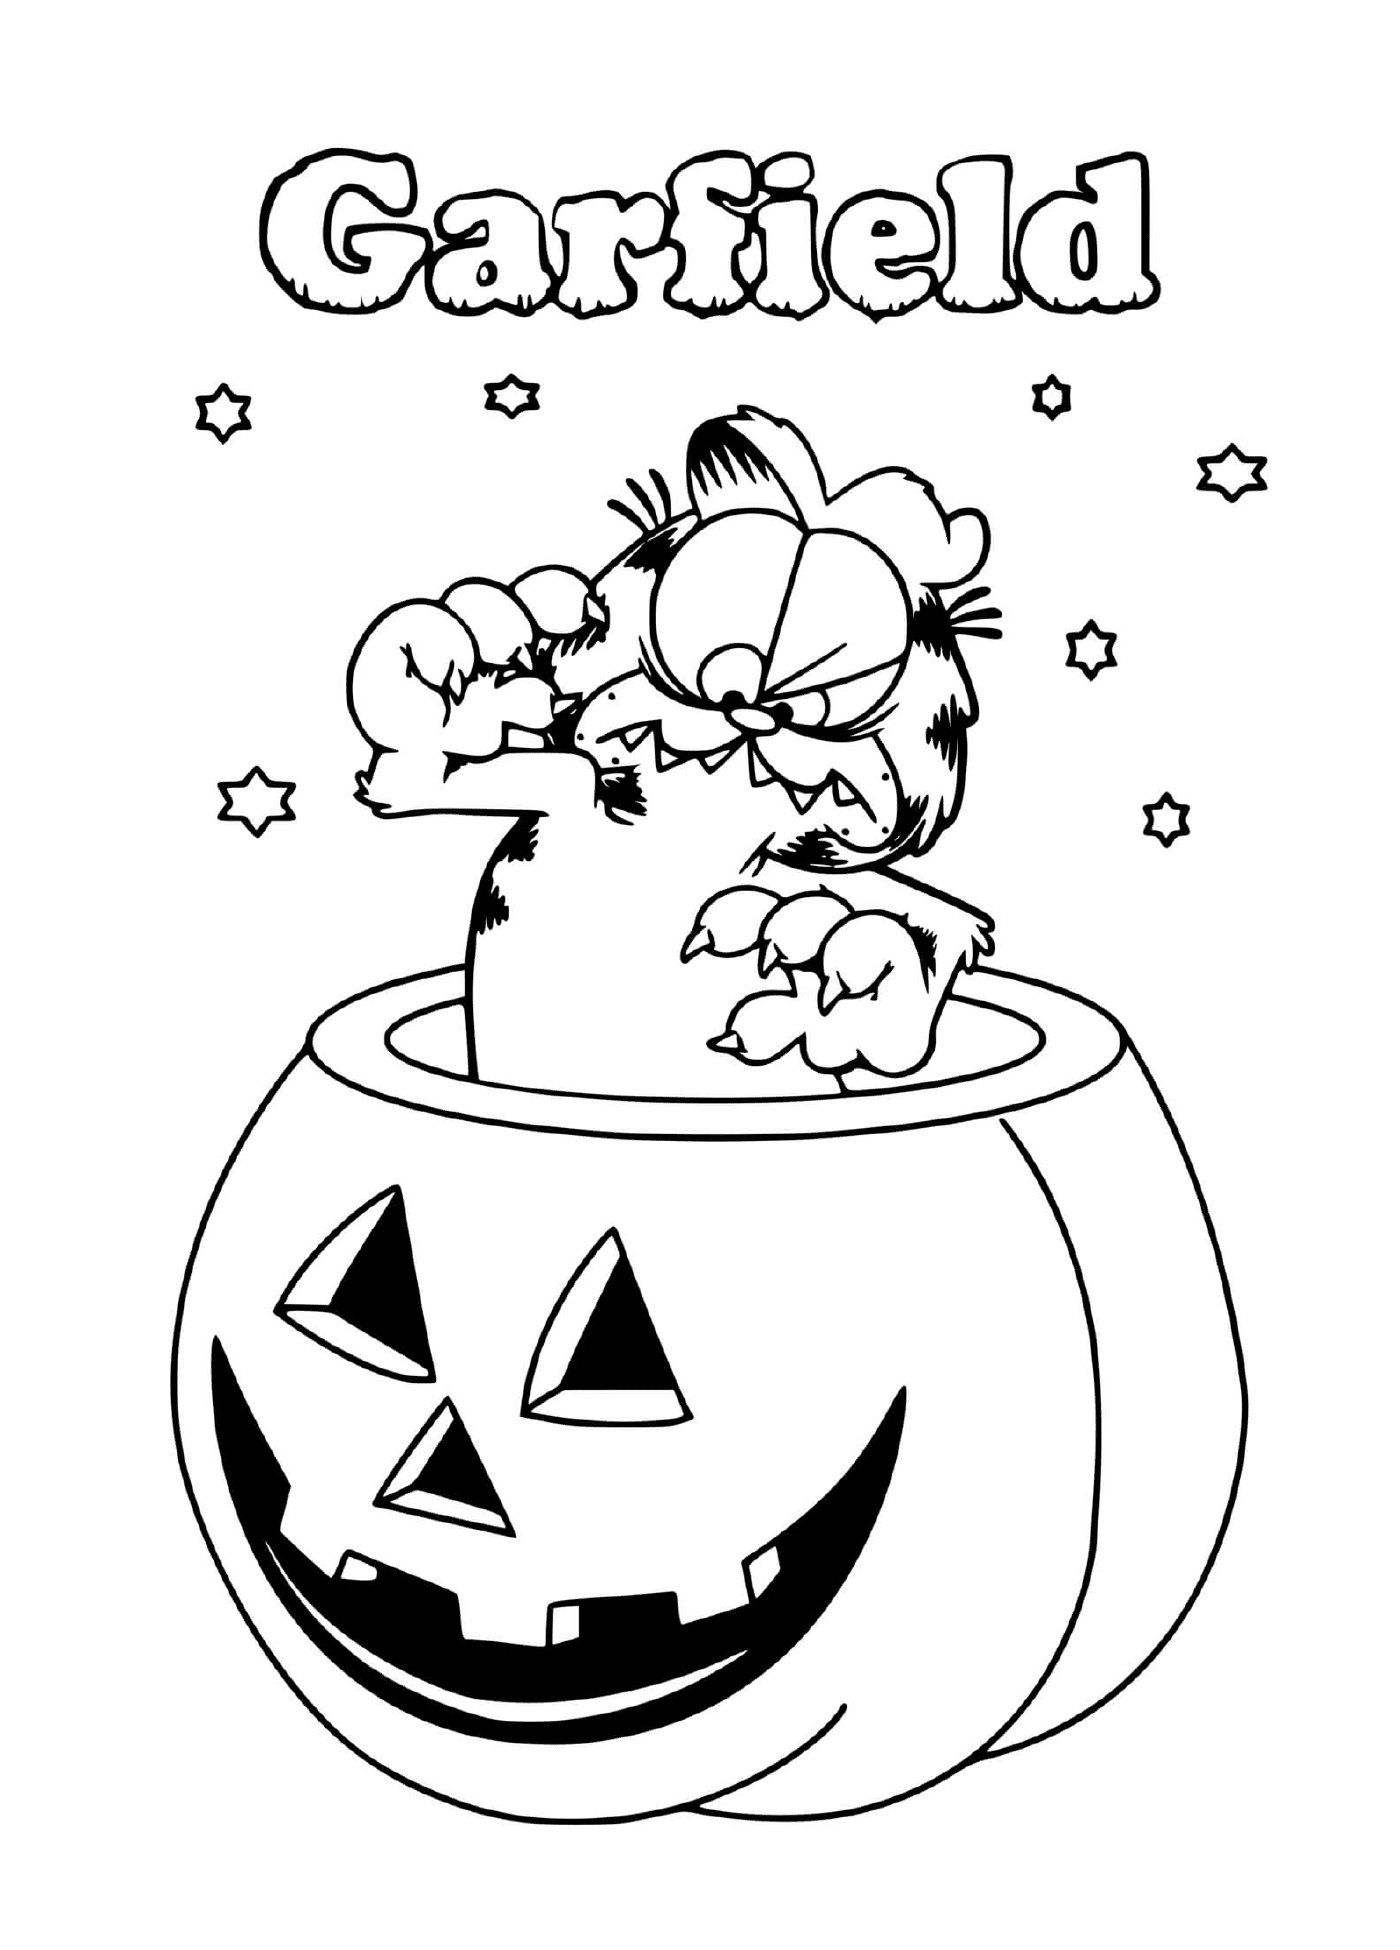  Garfield festeggia Halloween in una zucca 